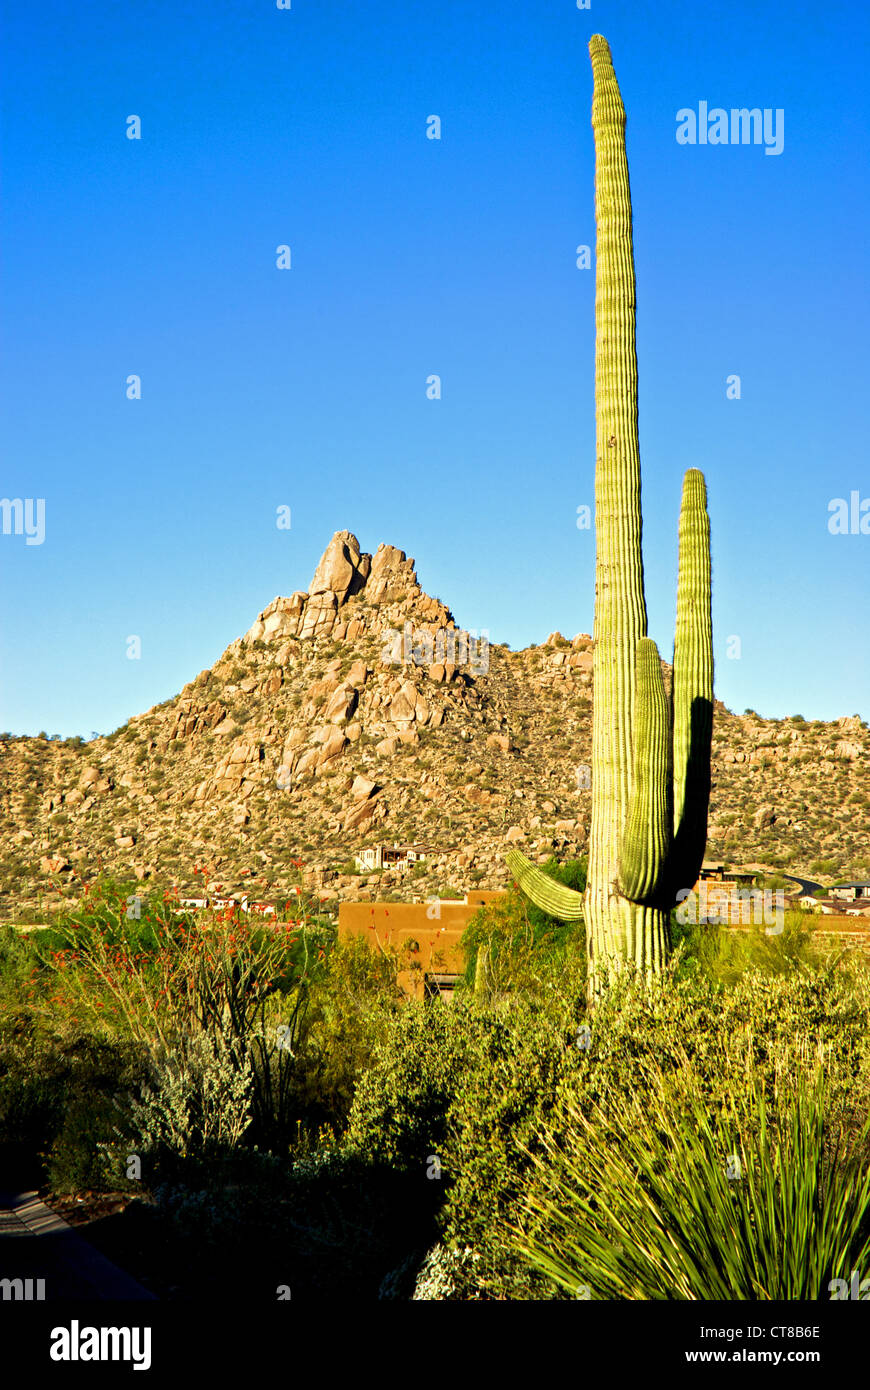 Low one two storey casitas rocky Sonoran desert setting saguaro cacti Four Seasons Resort Scottsdale Stock Photo